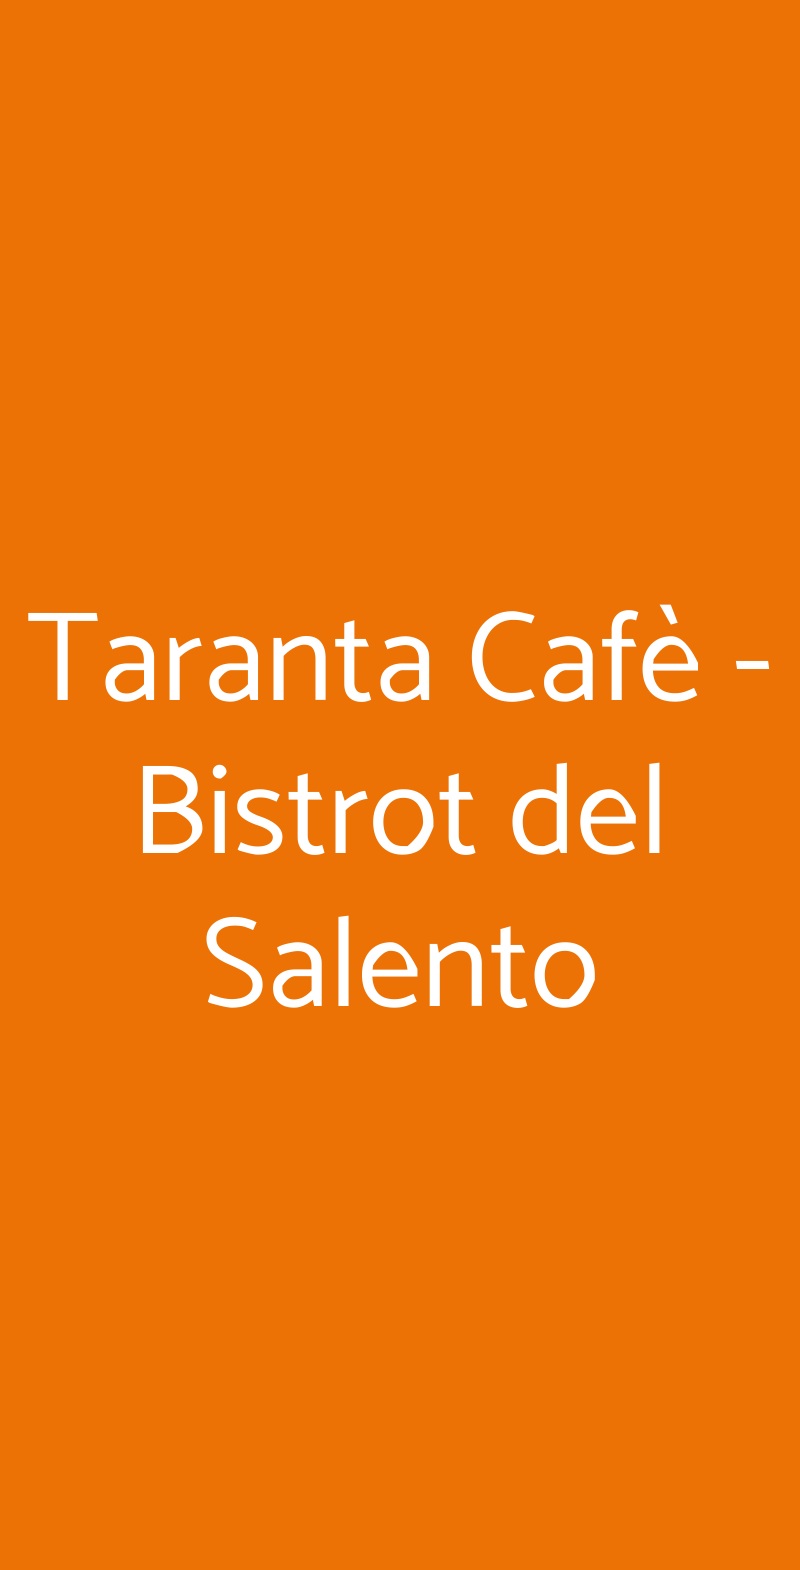 Taranta Cafè - Bistrot del Salento Milano menù 1 pagina